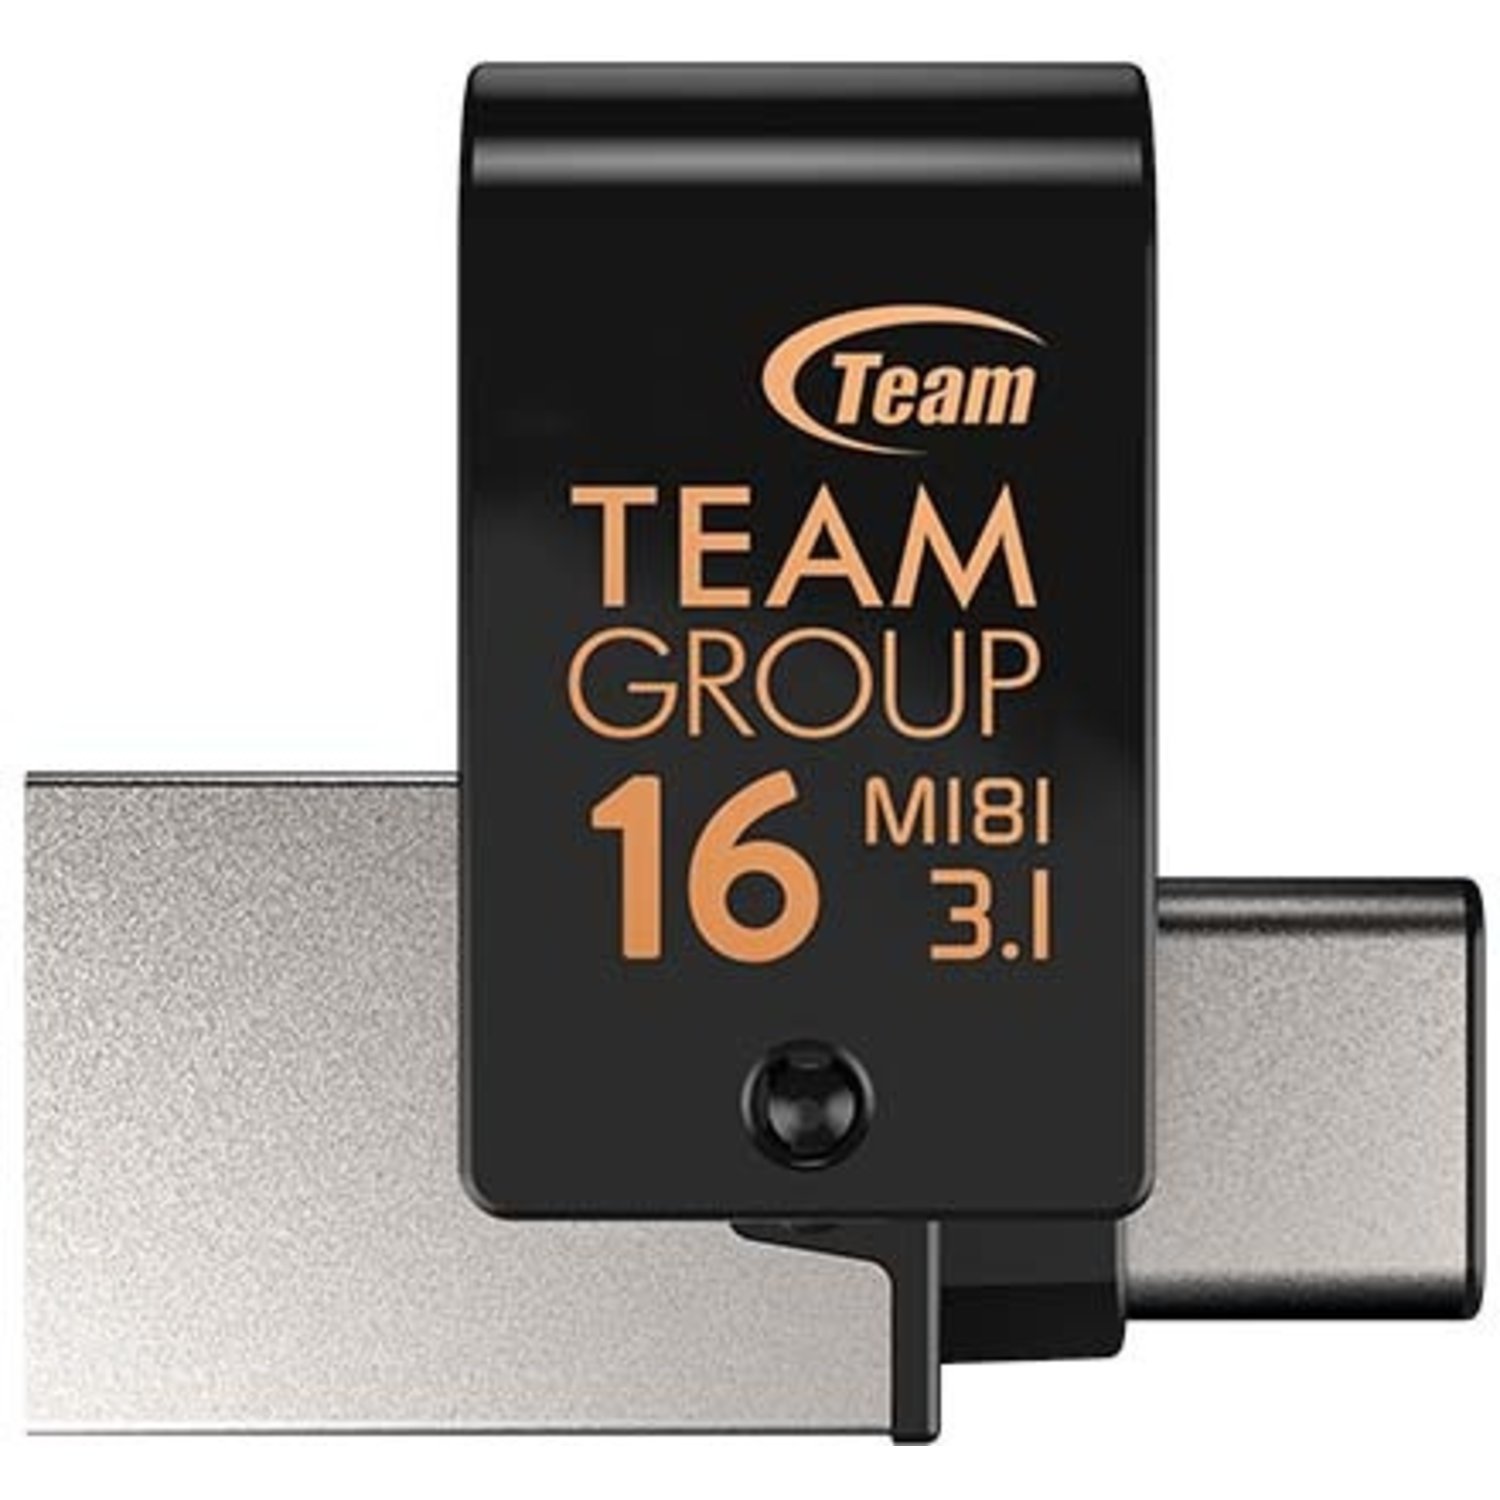 team-group-otg-m181-flash-drive